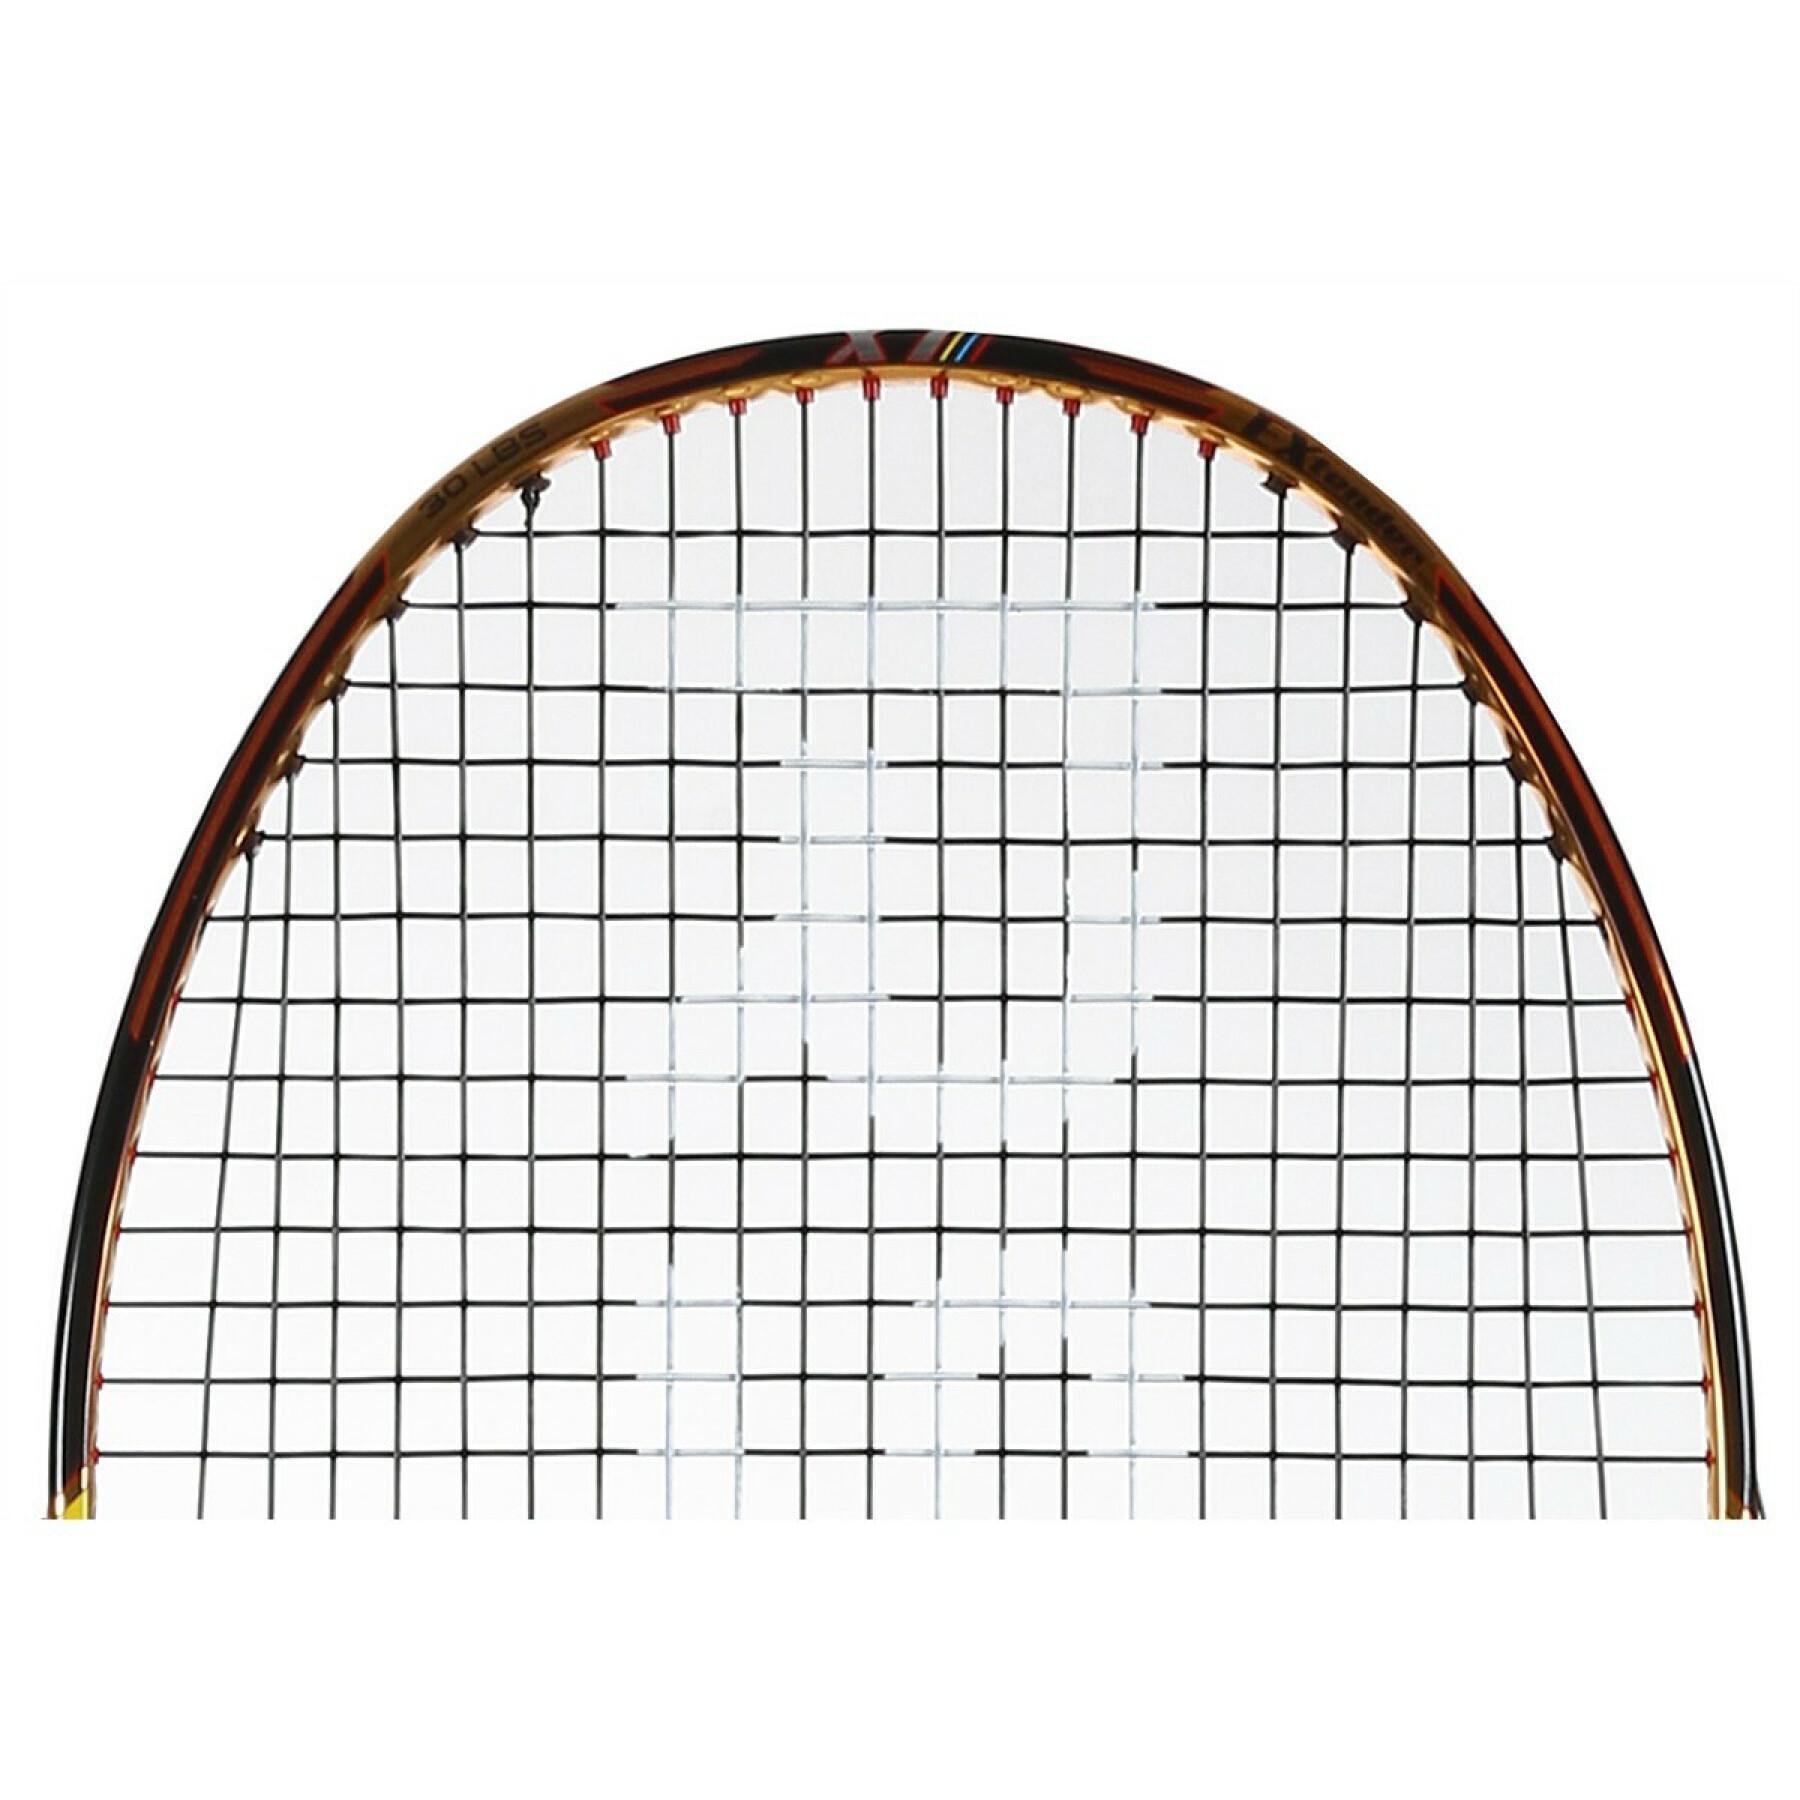 Raquete de Badminton RSL X7